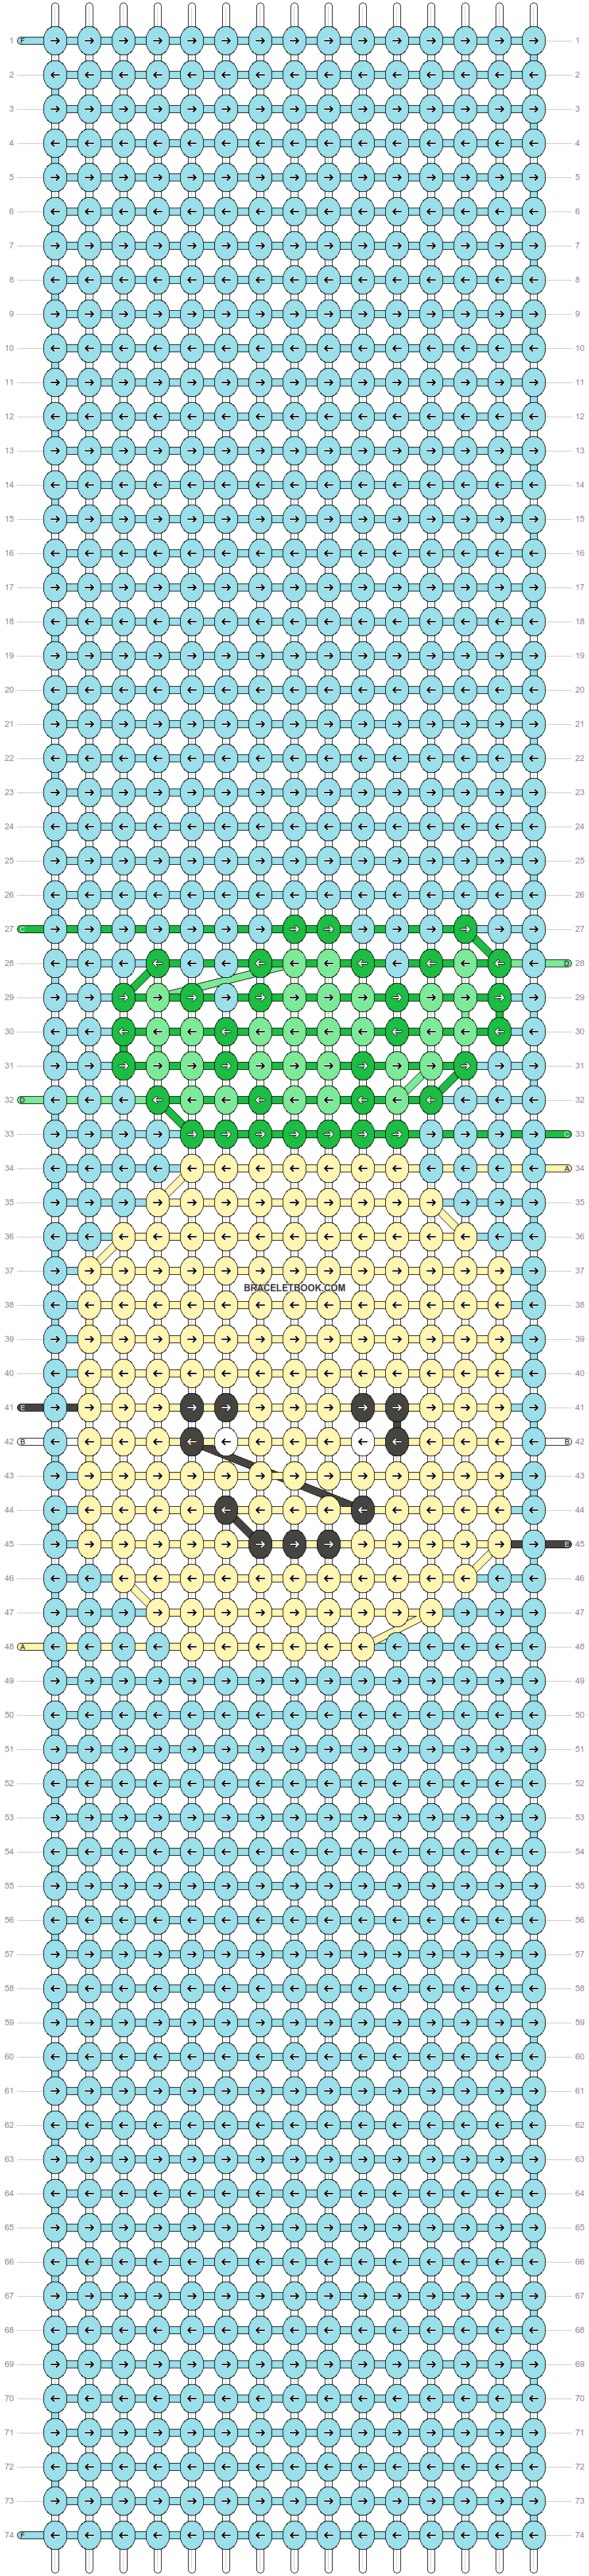 Alpha pattern #54519 pattern